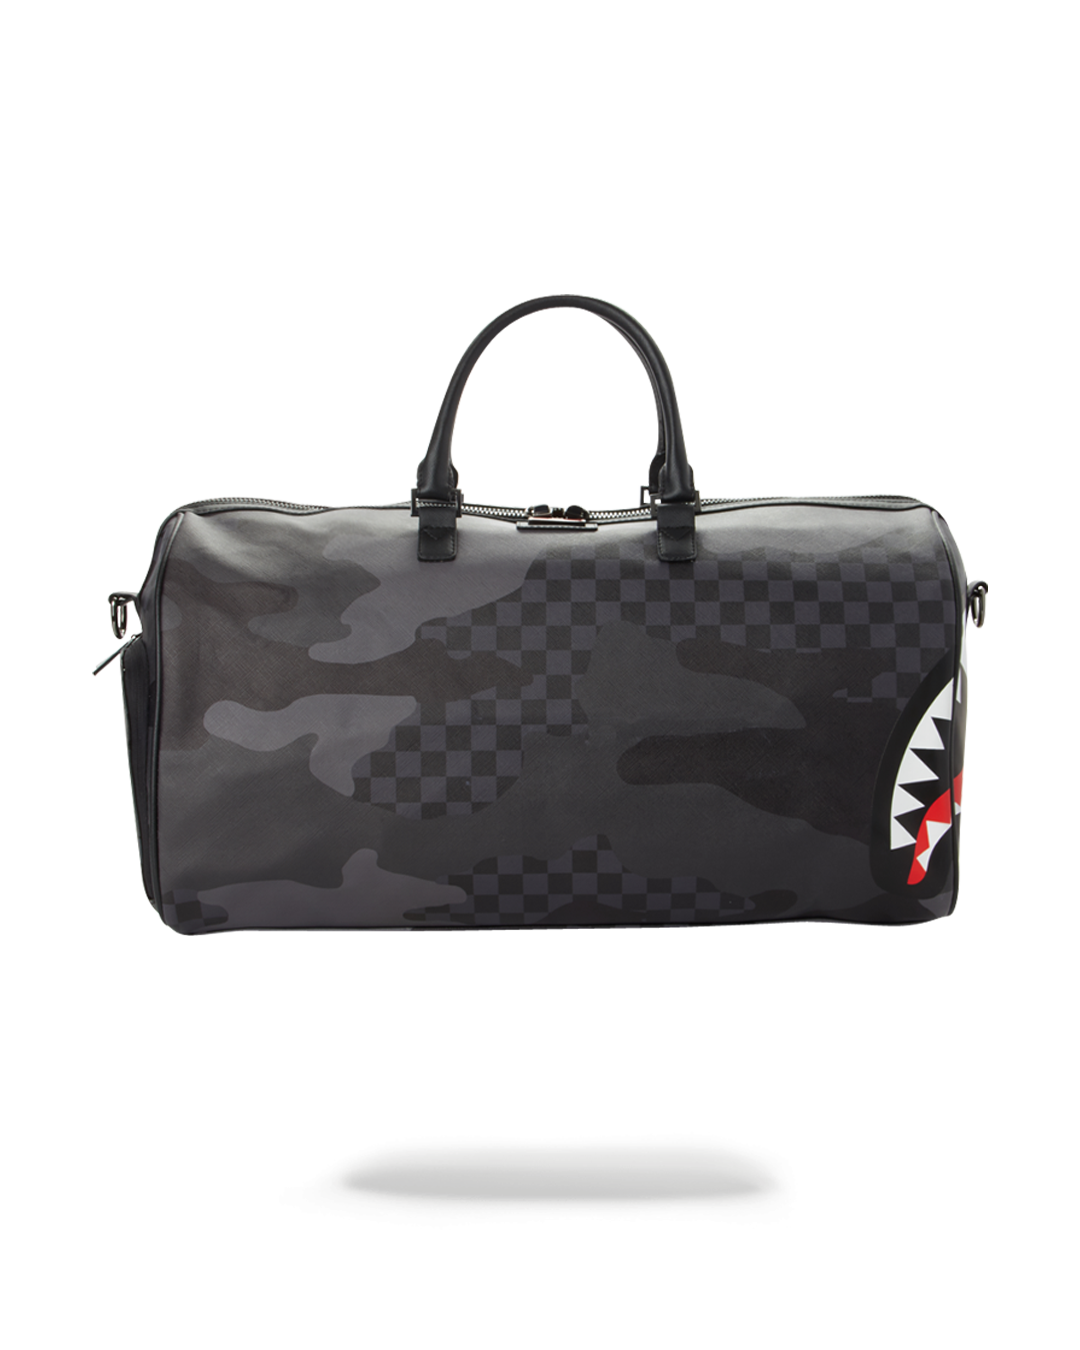 NEW Sprayground 3AM Black Camo Money Bear Backpack Limited Edition